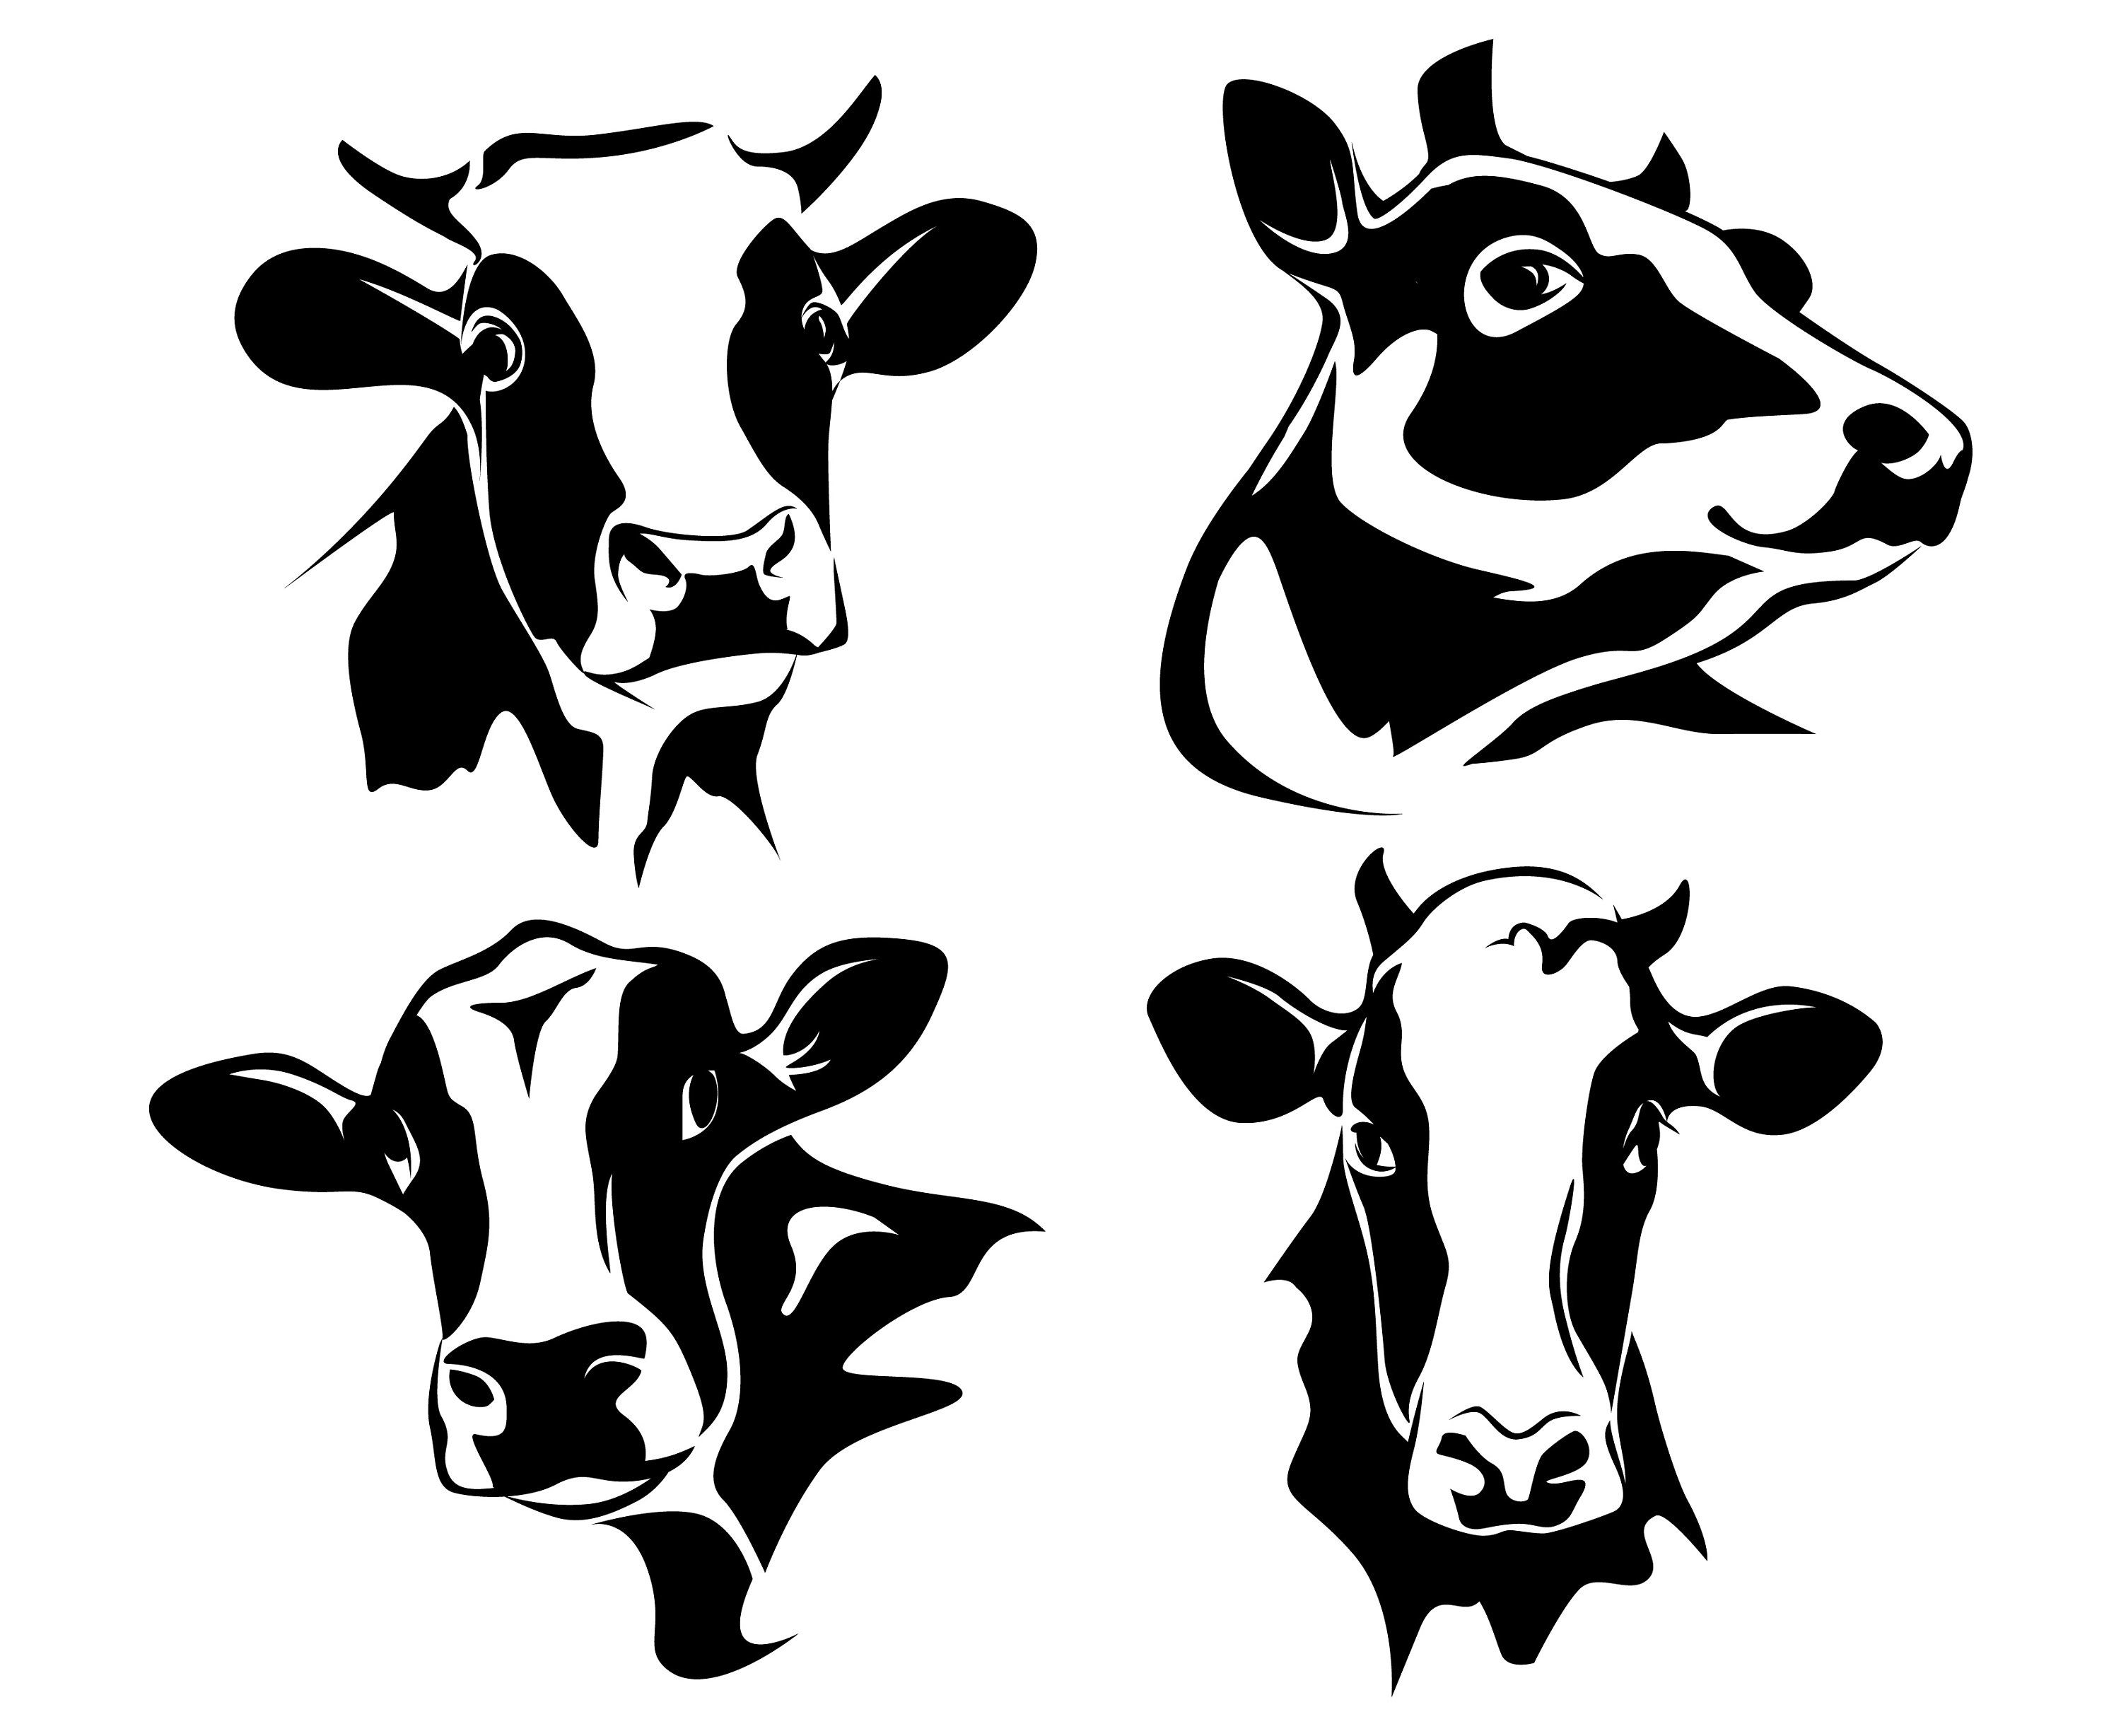 Cattle clipart logo. Pin by chris scott